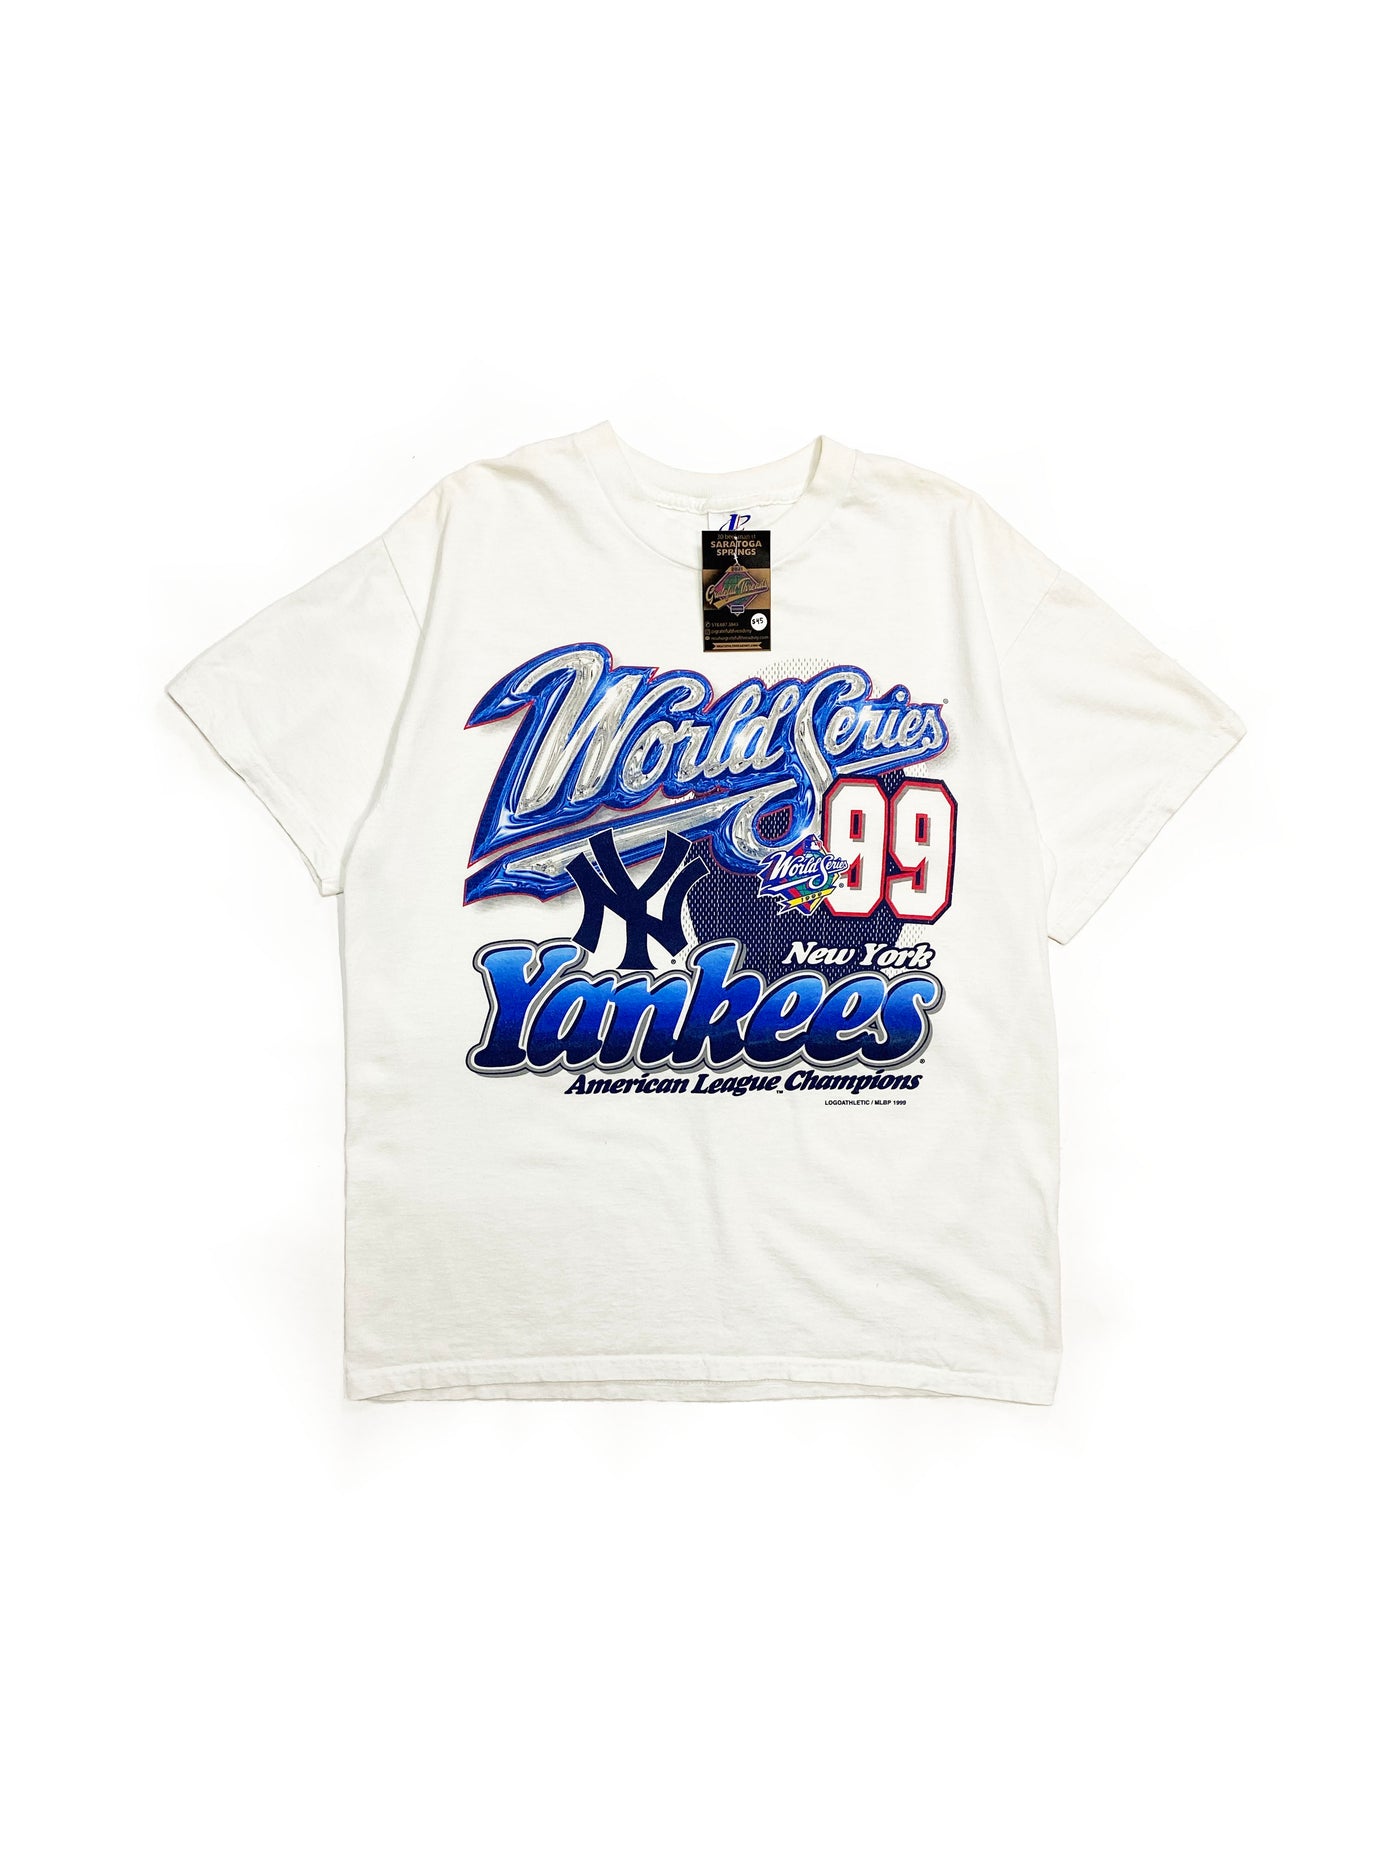 Vintage 1999 Yankees World Series T-Shirt